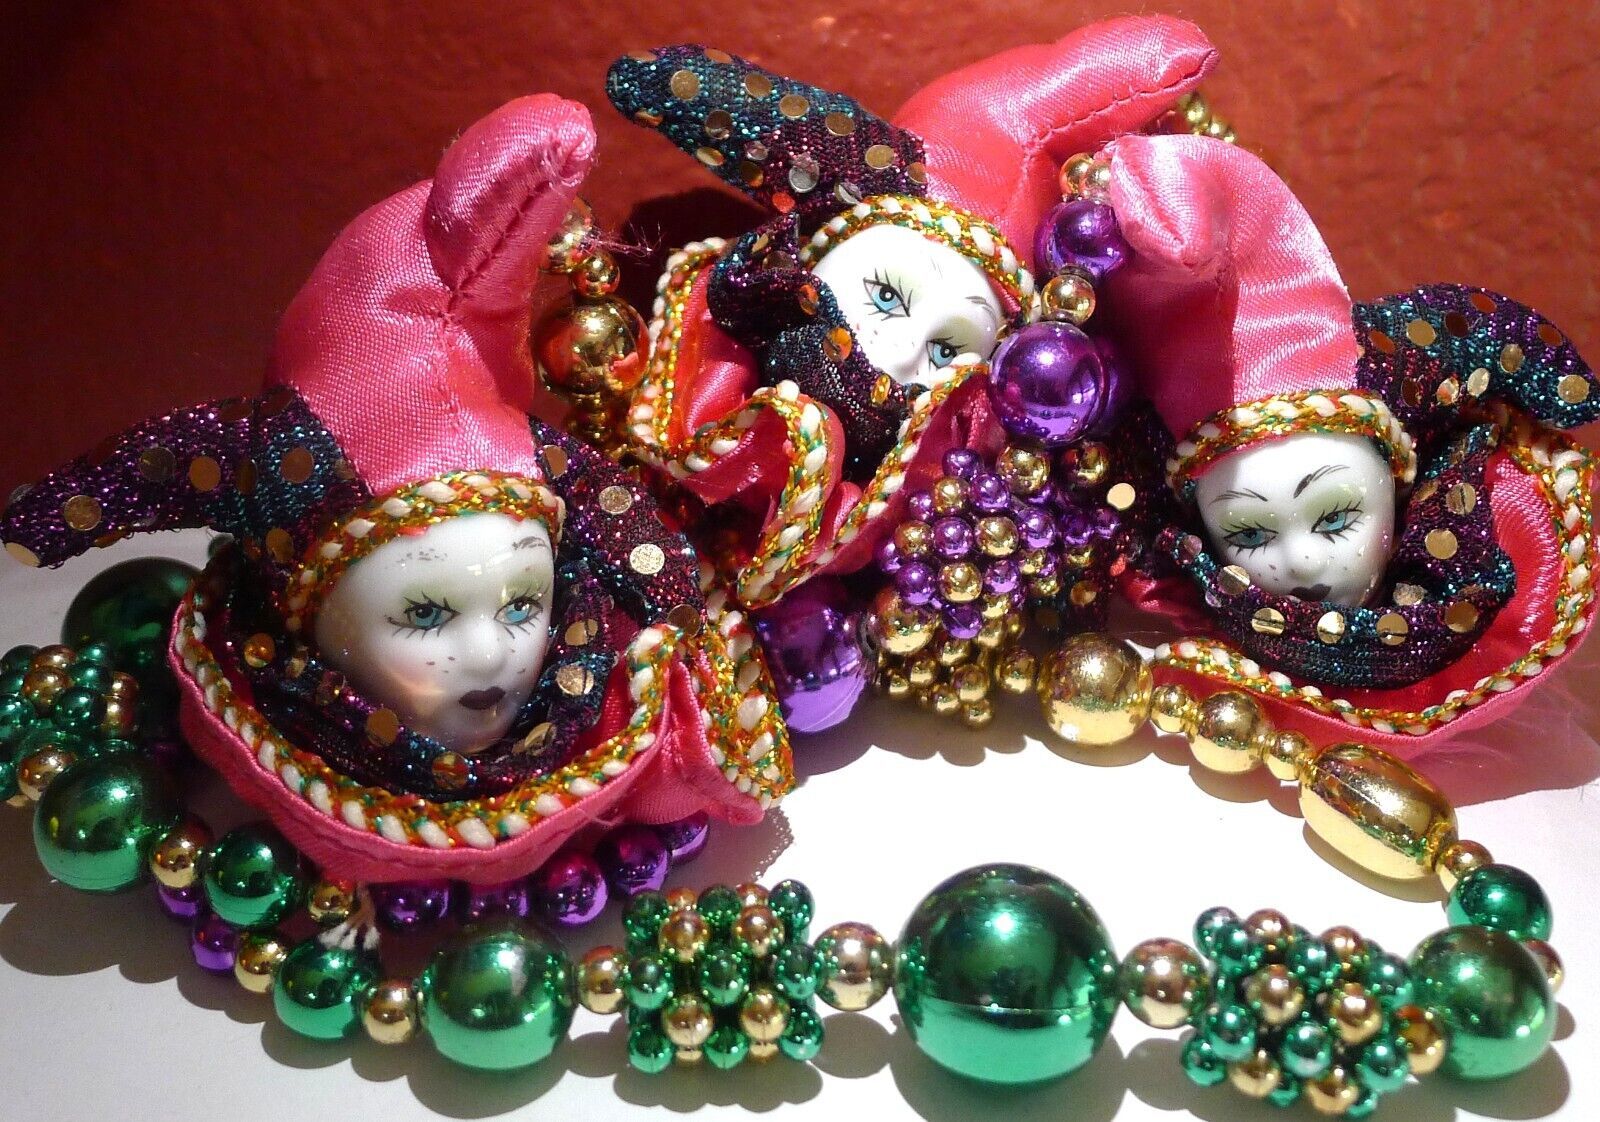 Purple Mardi Gras Pirate Beads Necklace